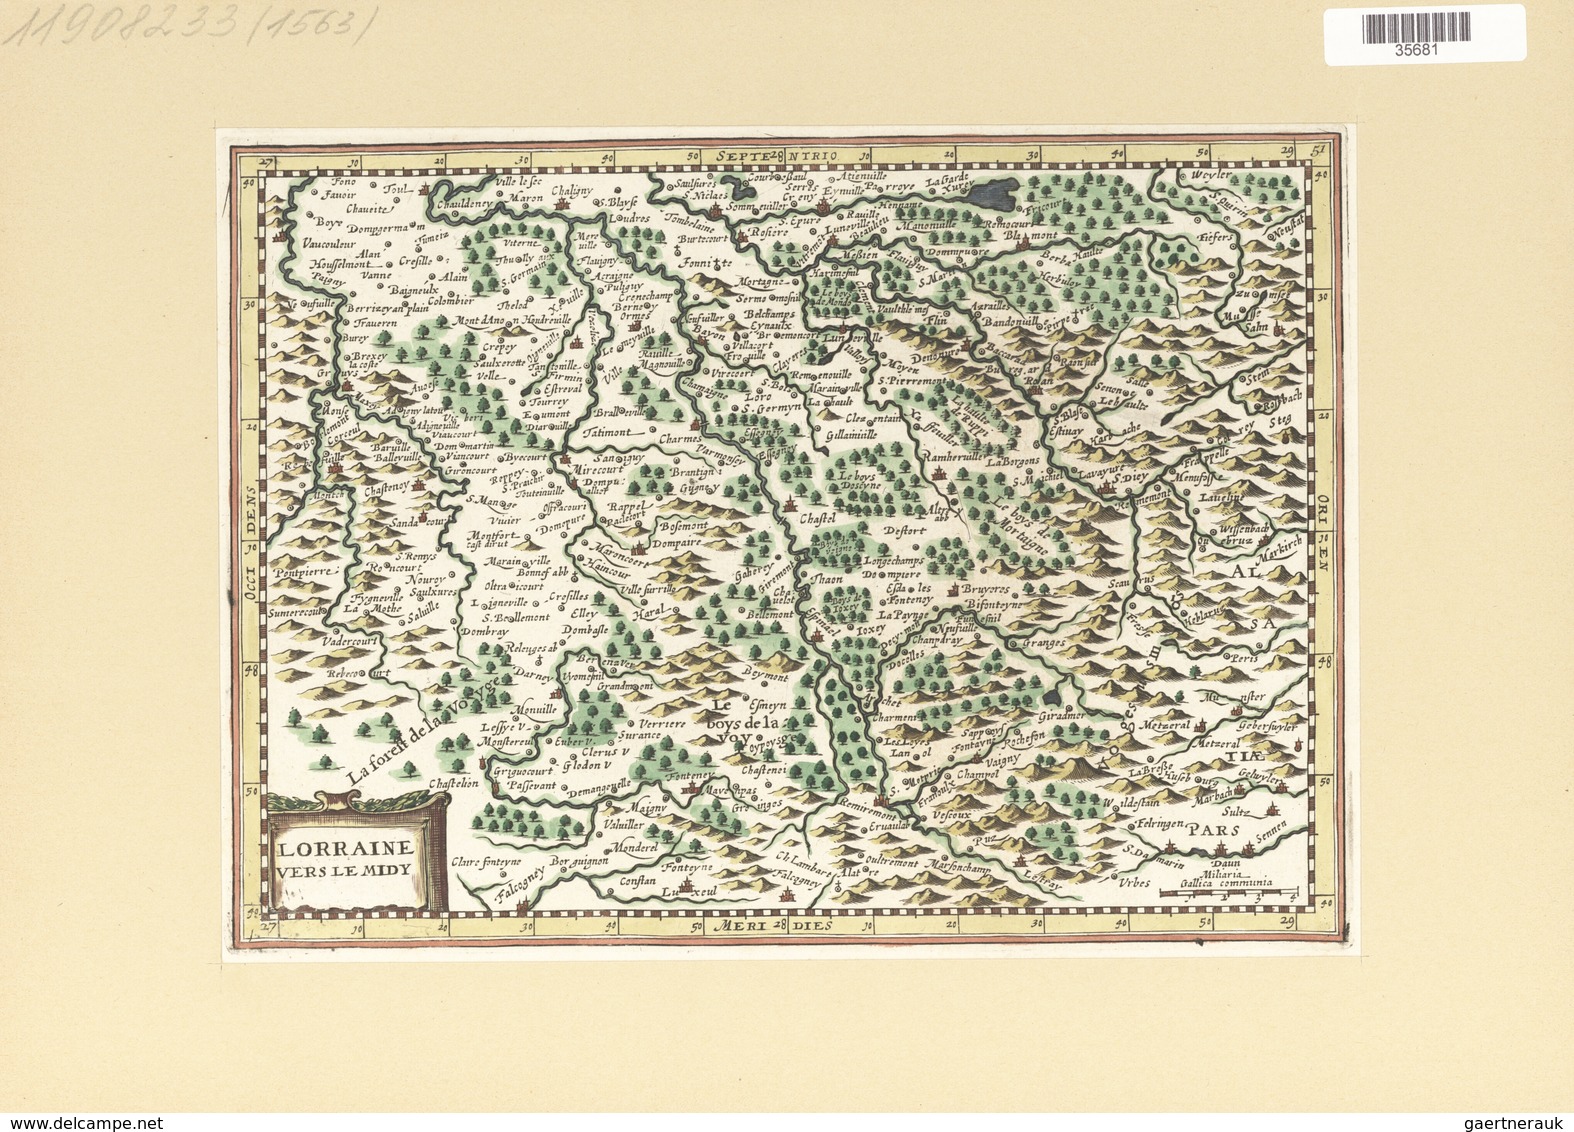 Landkarten Und Stiche: 1734. Map Of Lorraine / Lothringen, France/Germany. From The Mercator Atlas M - Geographie